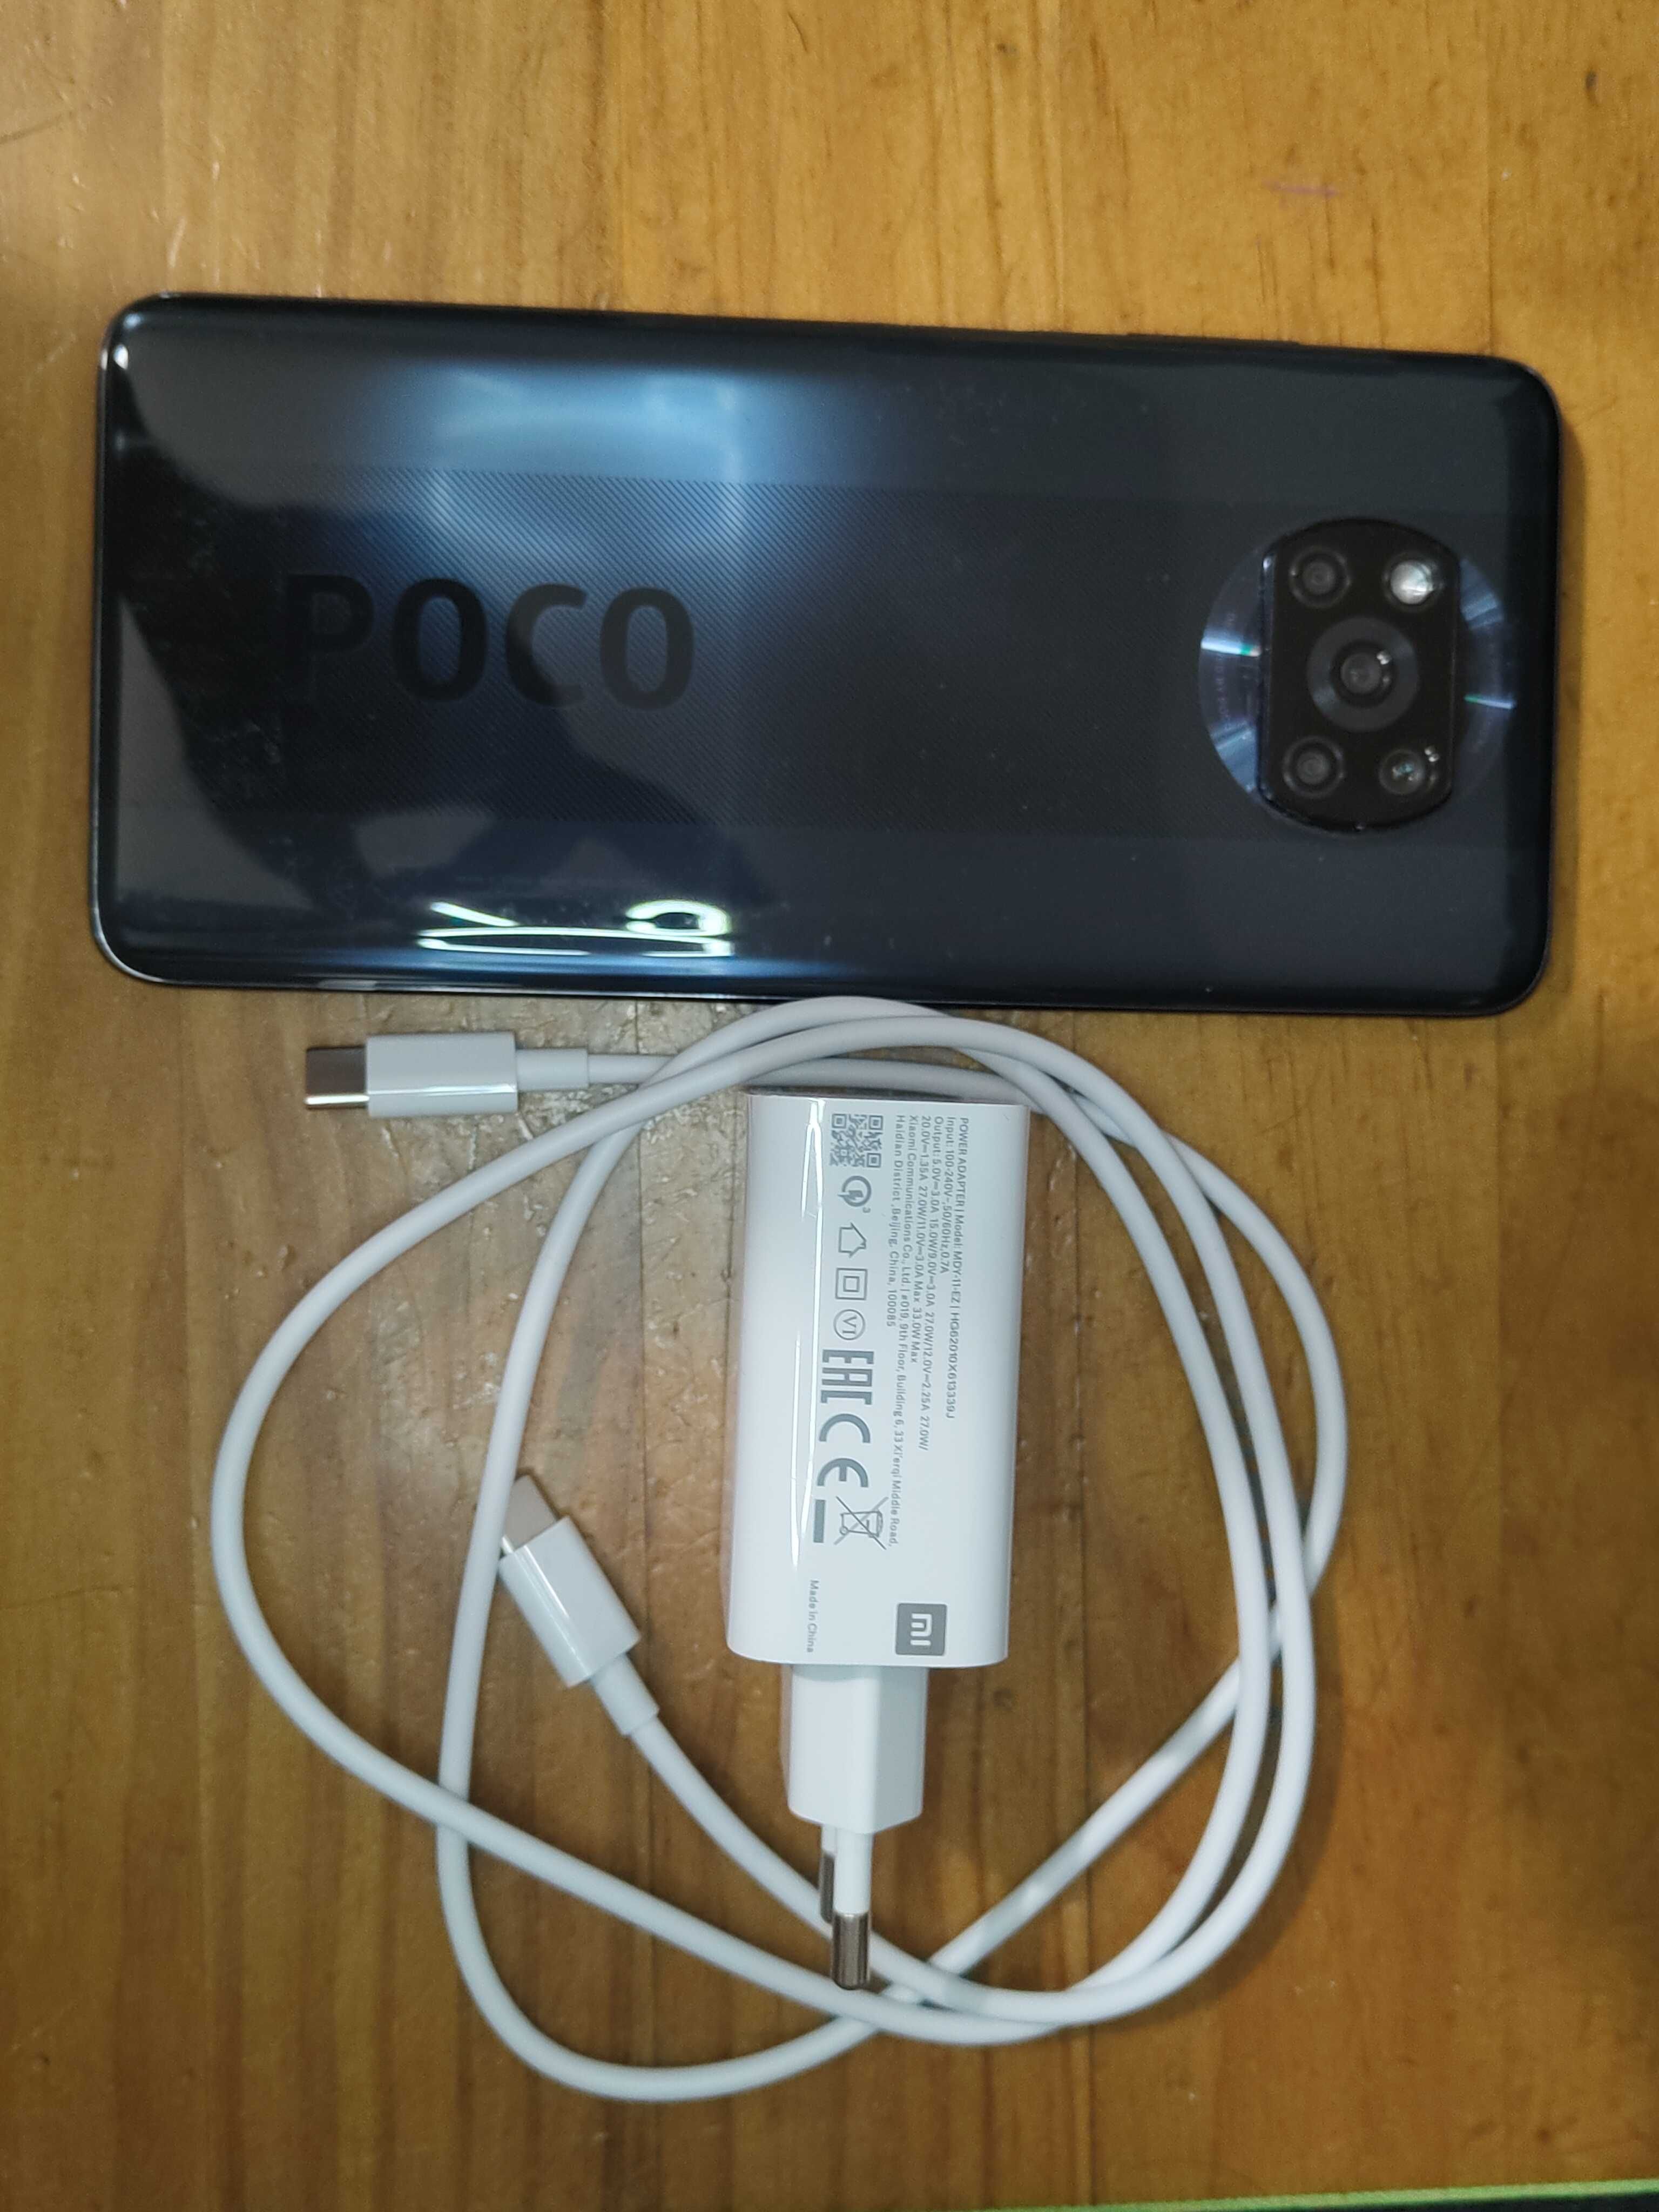 Poco X3 NFC 64GB